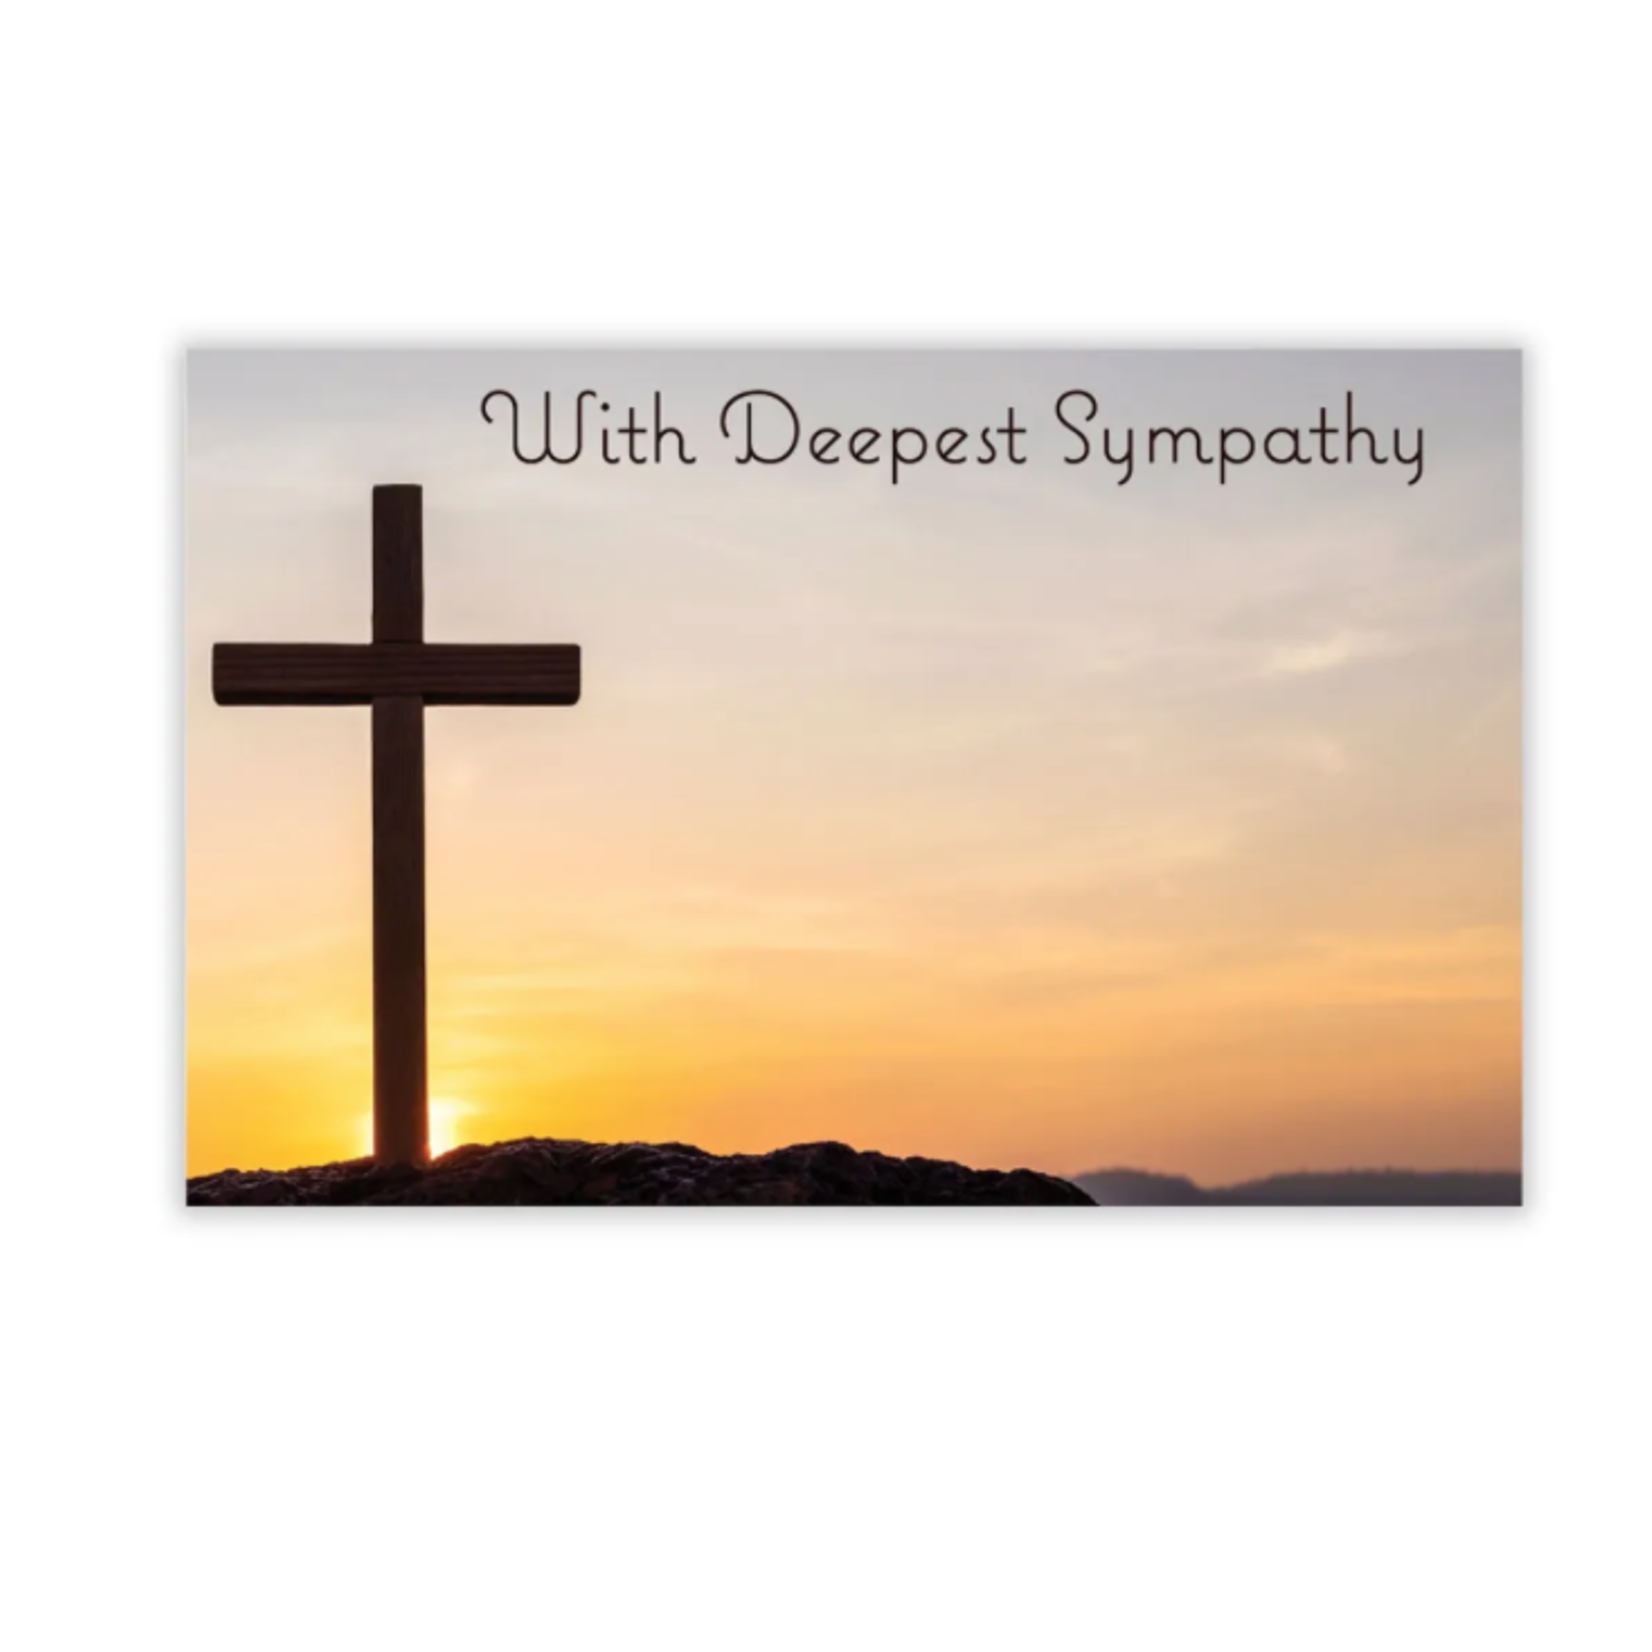 "WITH DEEPEST SYMPATHY" CAPRI CARD